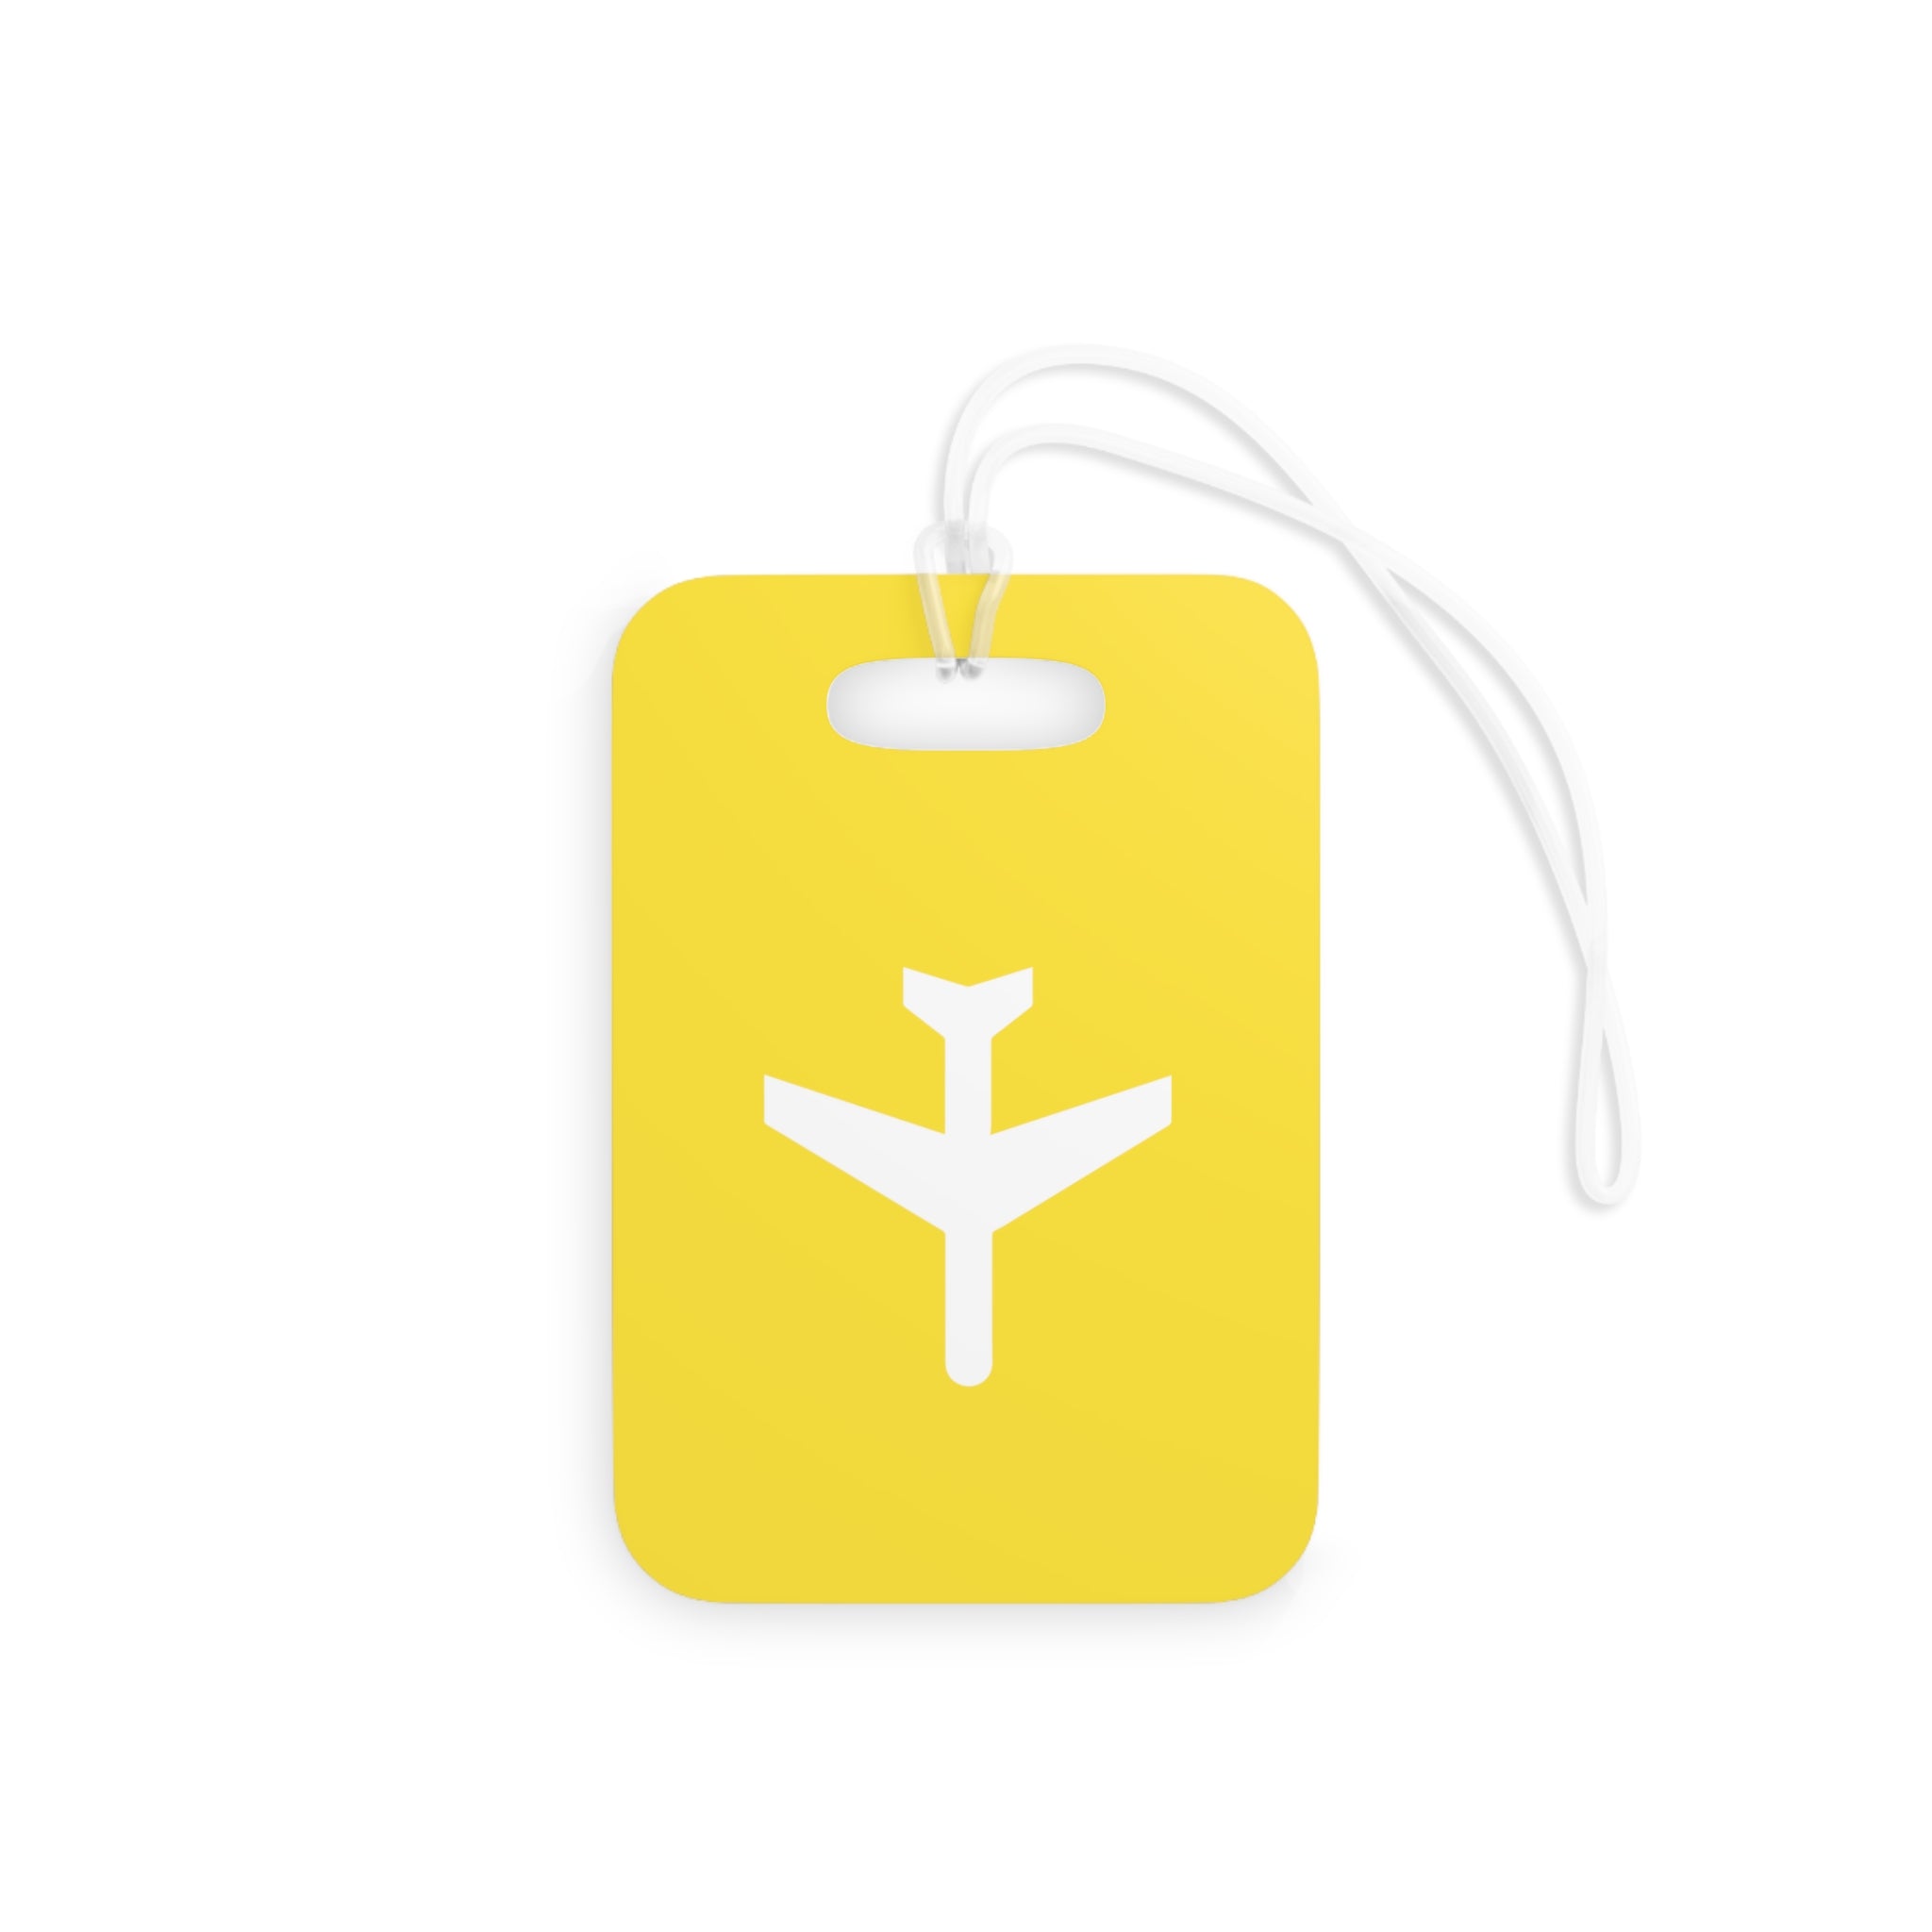 Airplane Luggage Tag (Yellow)